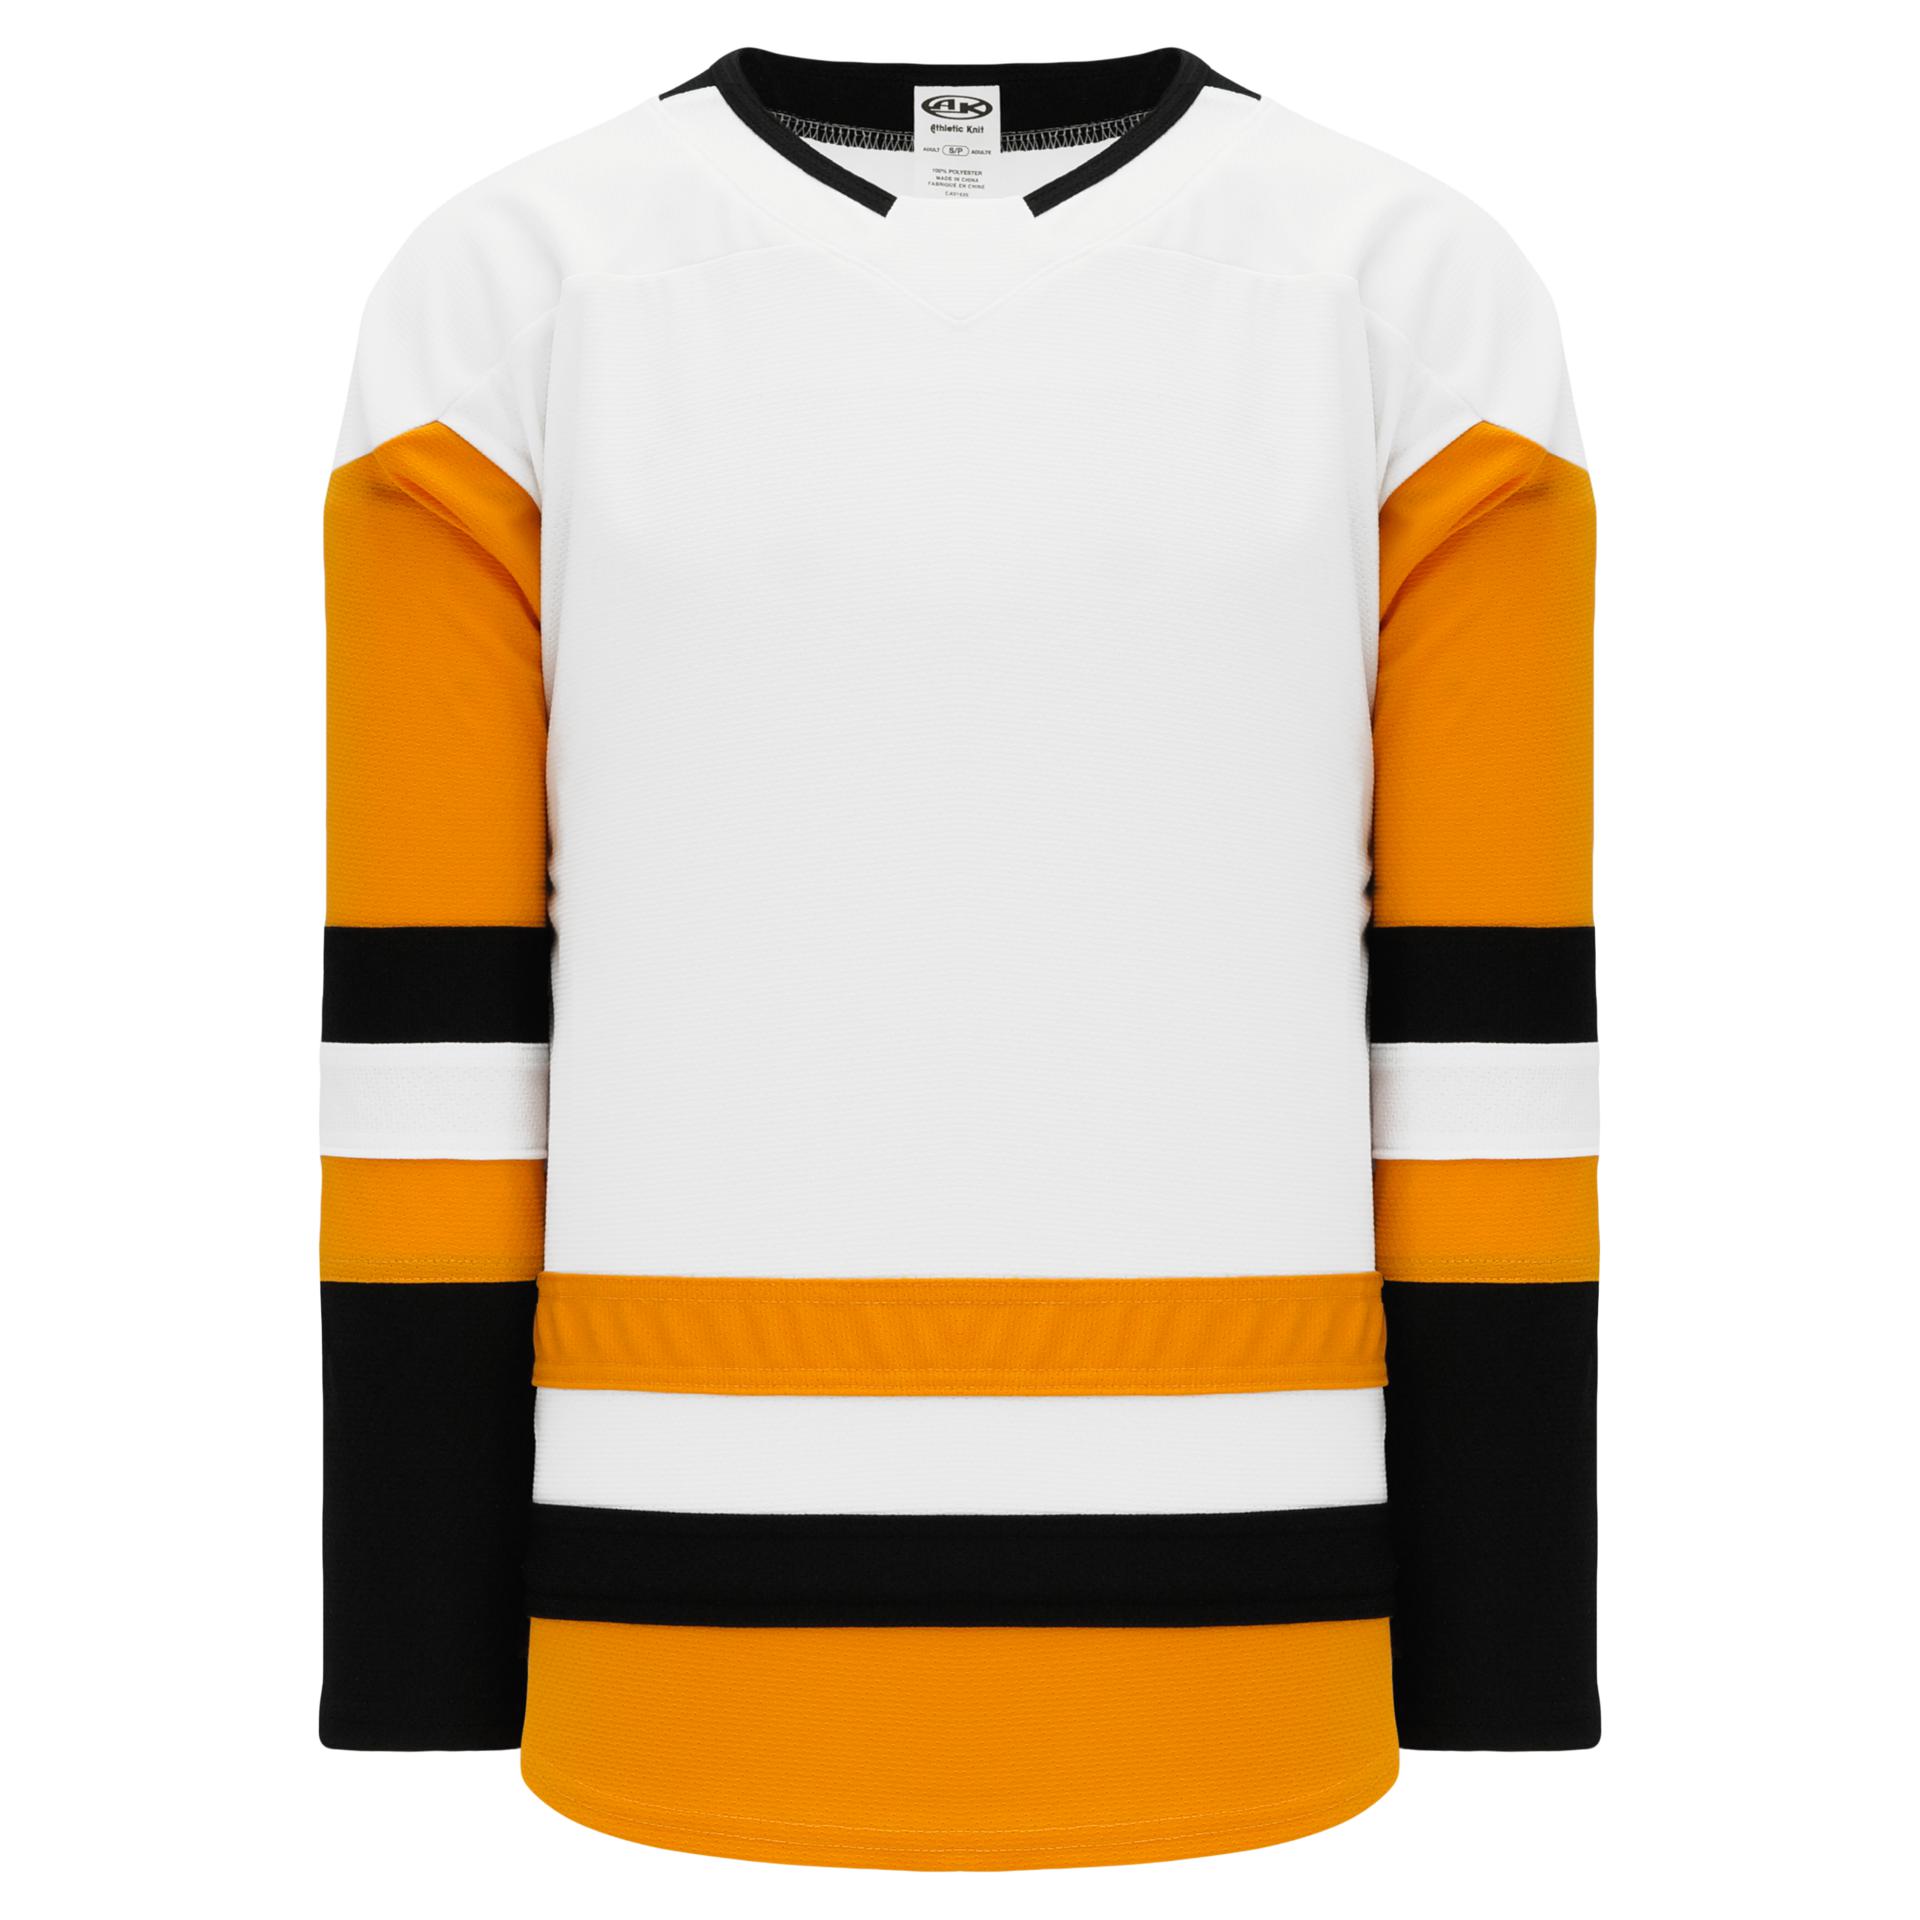 penguins blank jersey